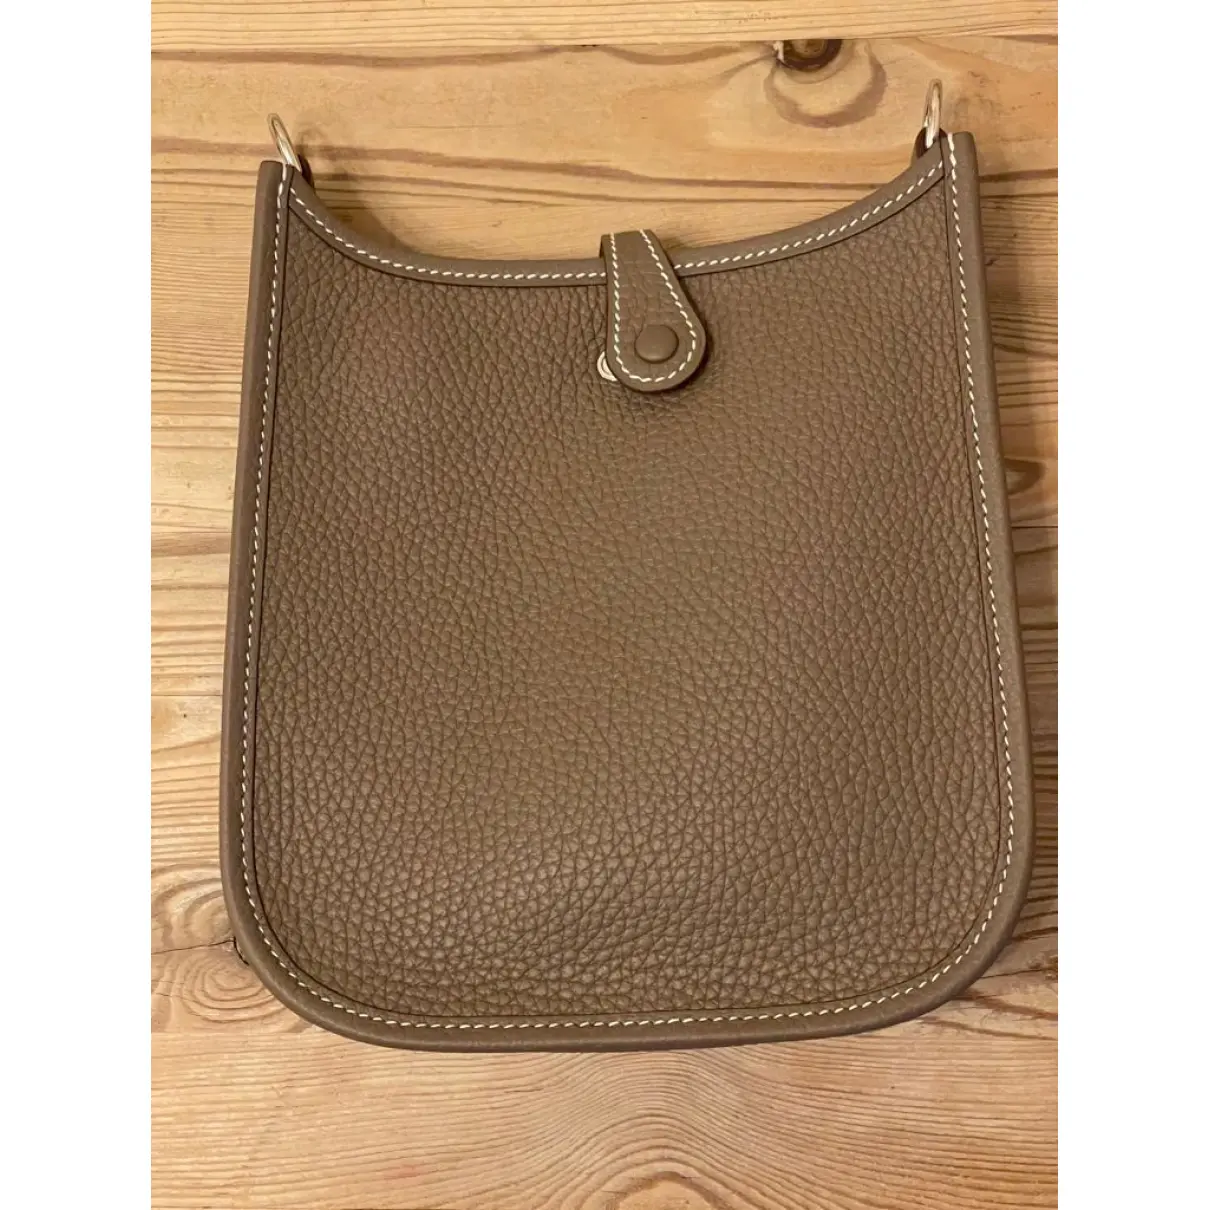 Buy Hermès Mini Evelyne leather crossbody bag online